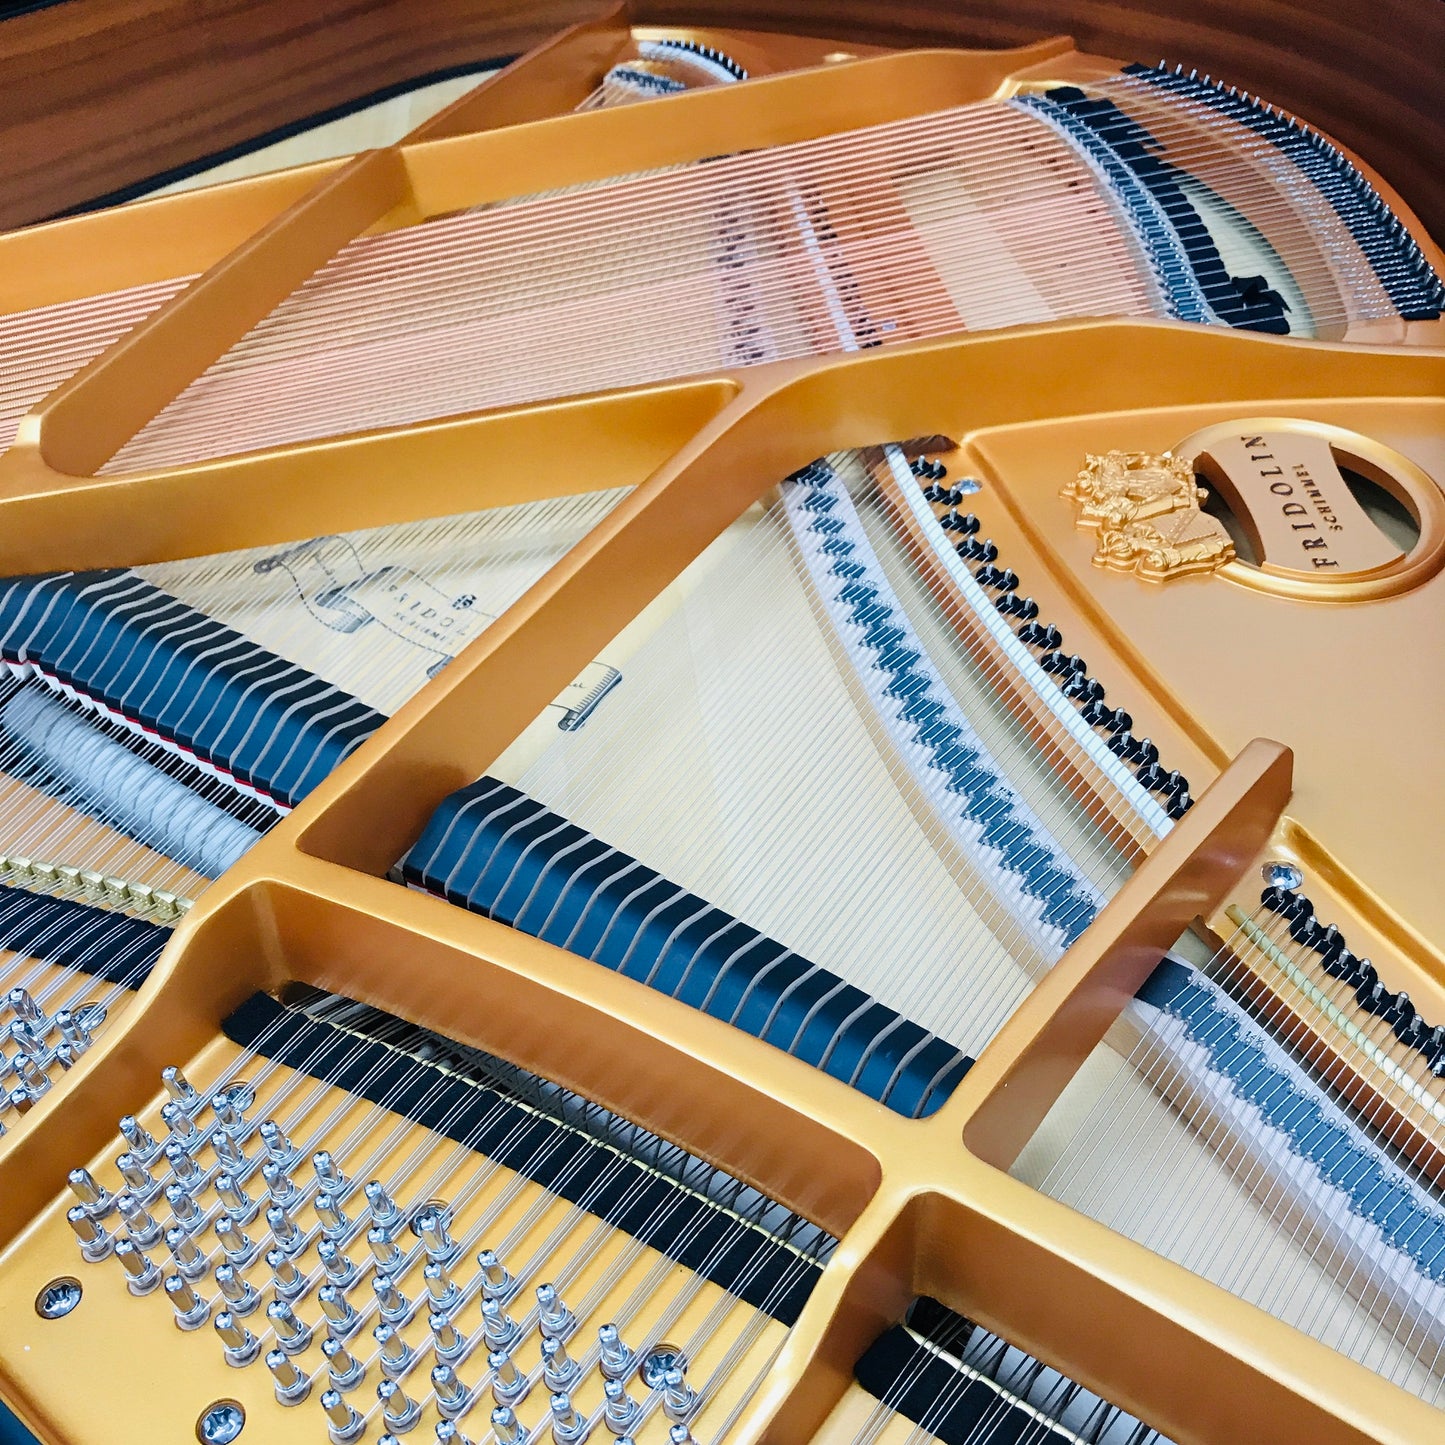 Schimmel Fridolin F156 Grand Piano